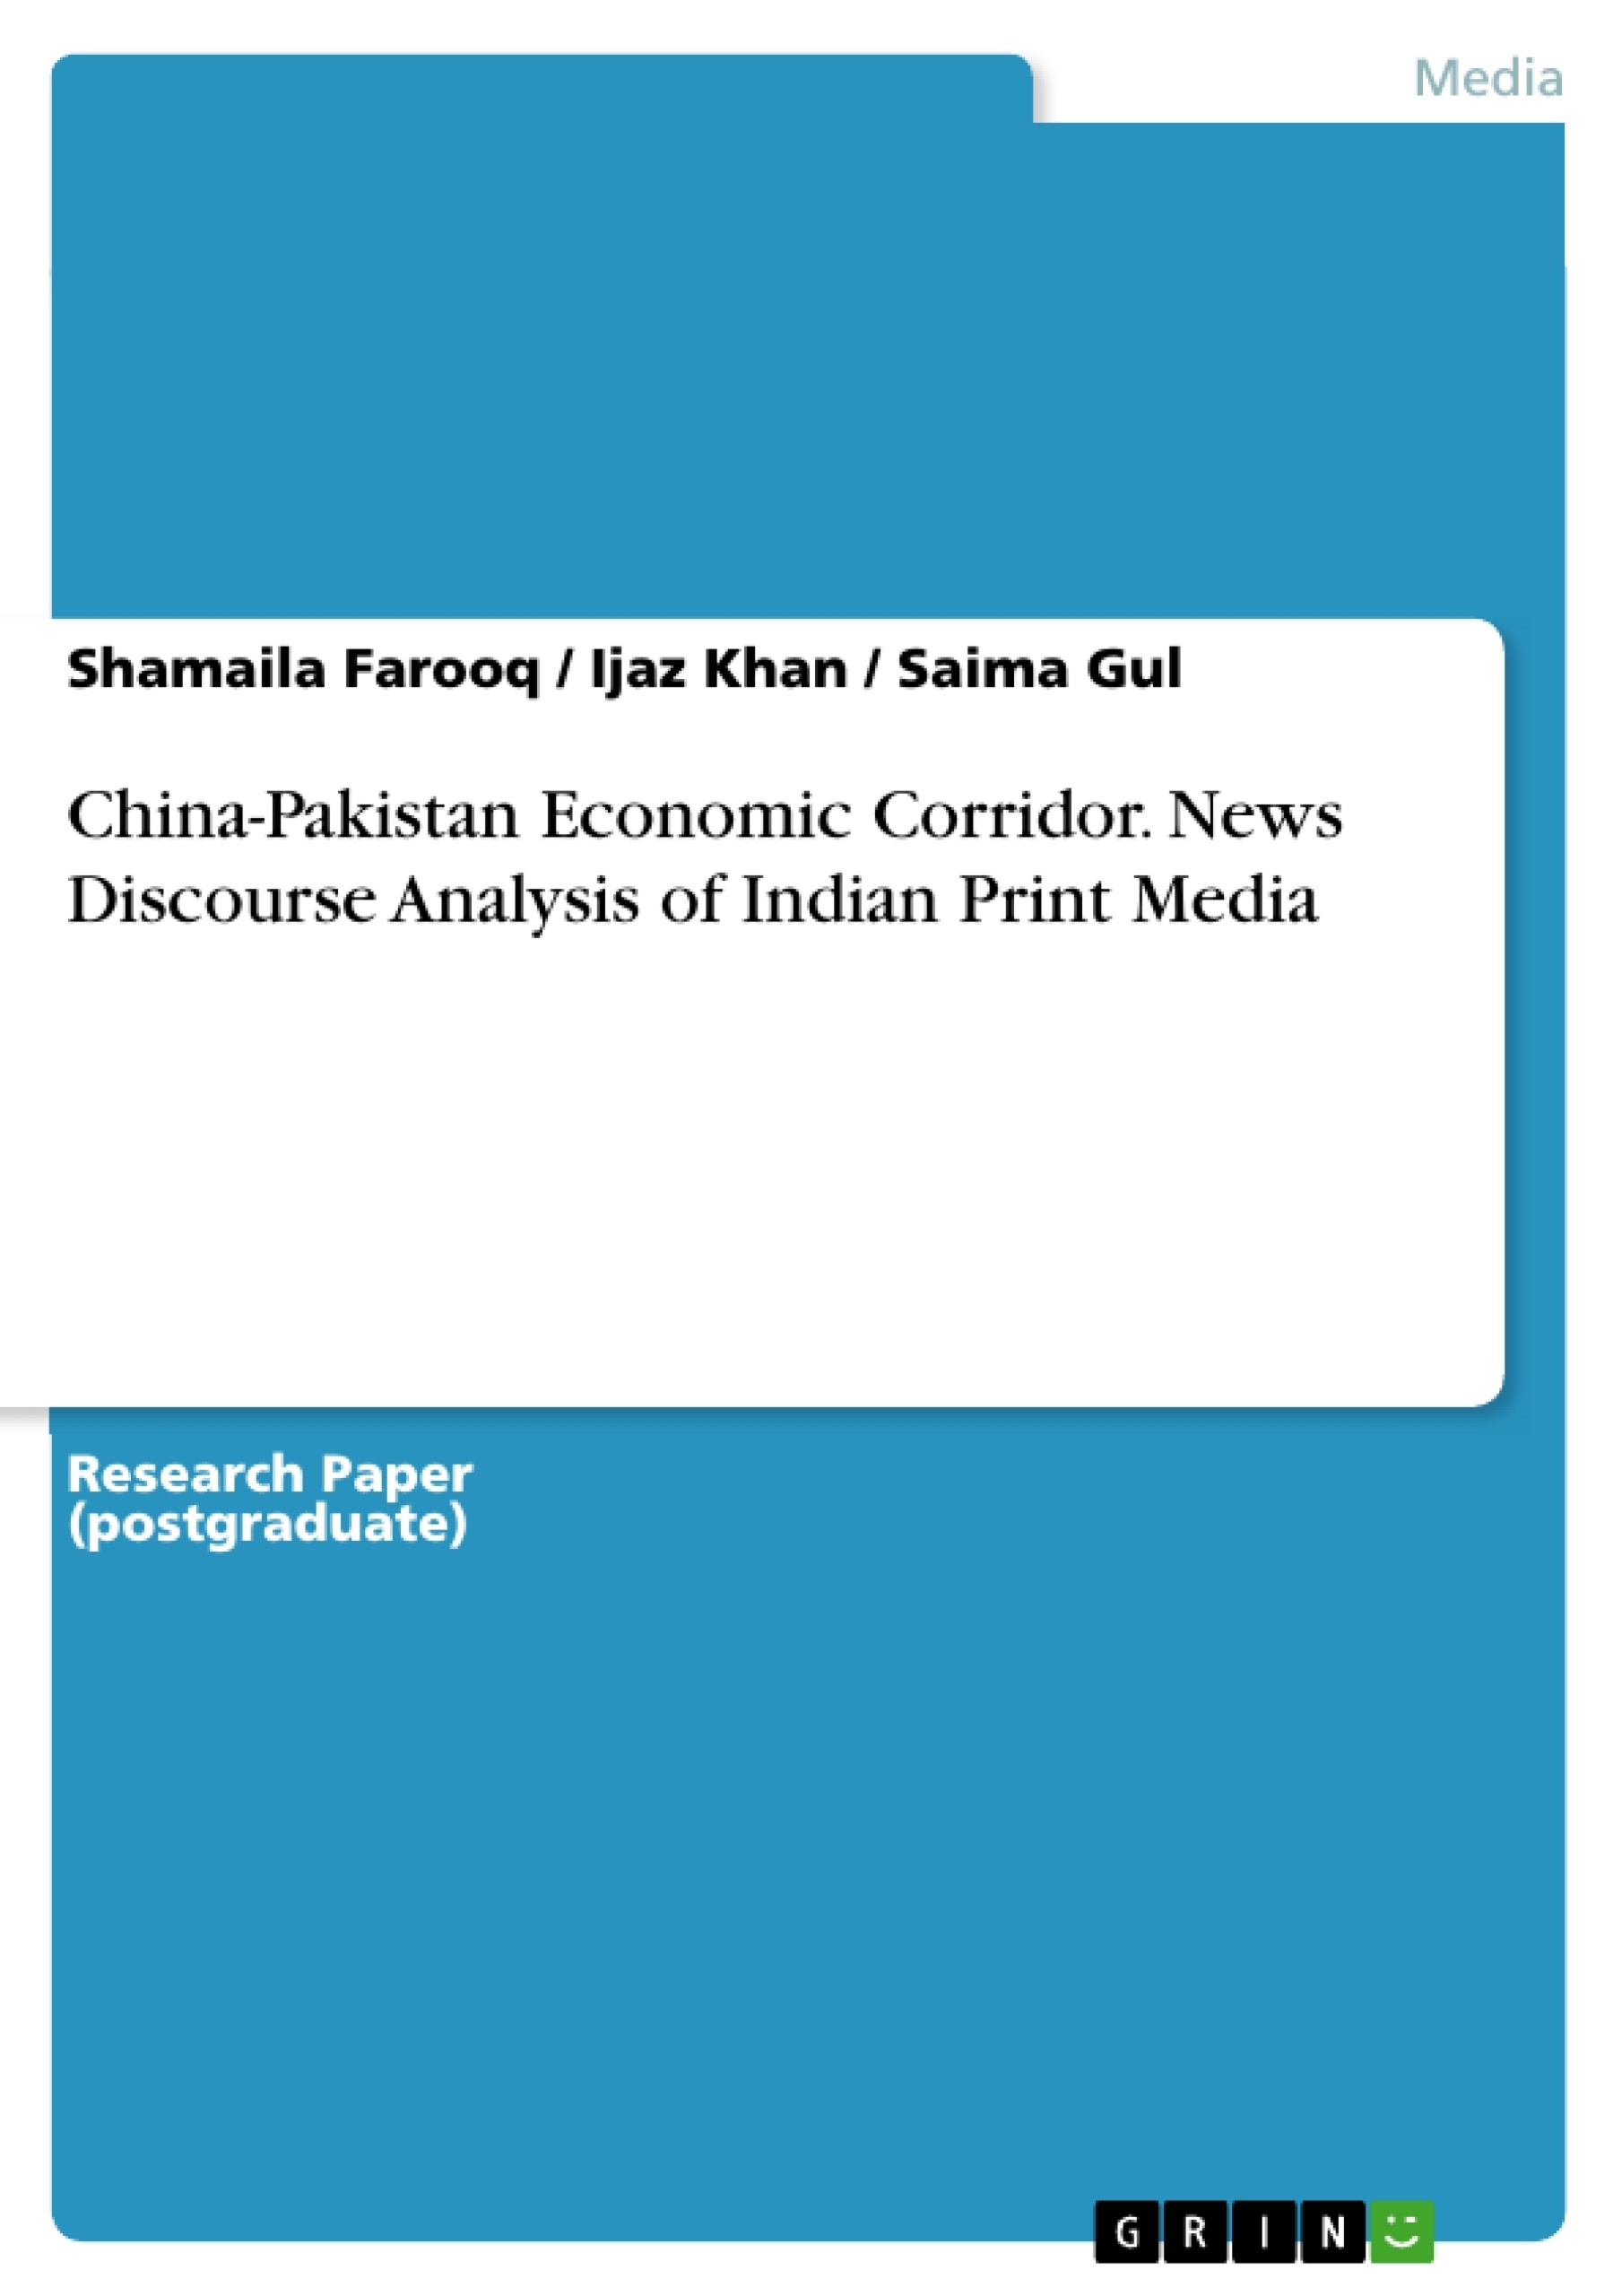 News　China-Pakistan　GRIN　Print　Corridor.　Analysis　Economic　Indian　Media　Discourse　of